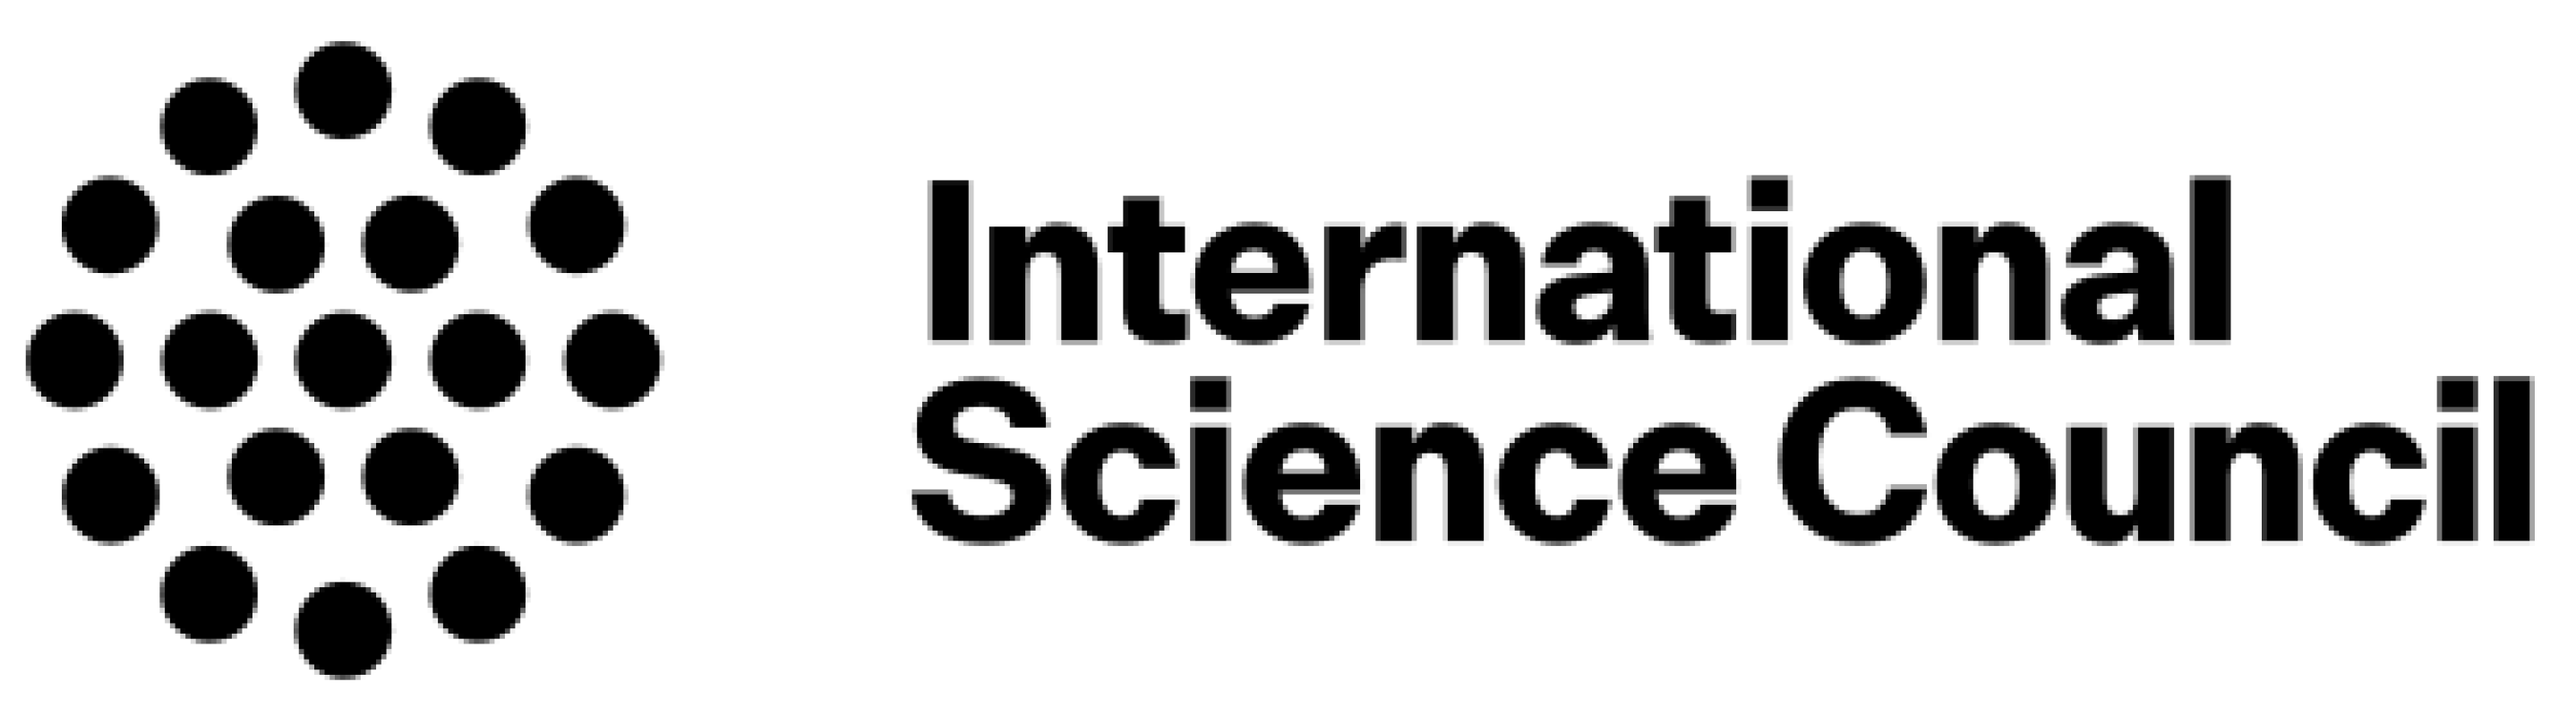 500px-International_science_council_logo.svg_